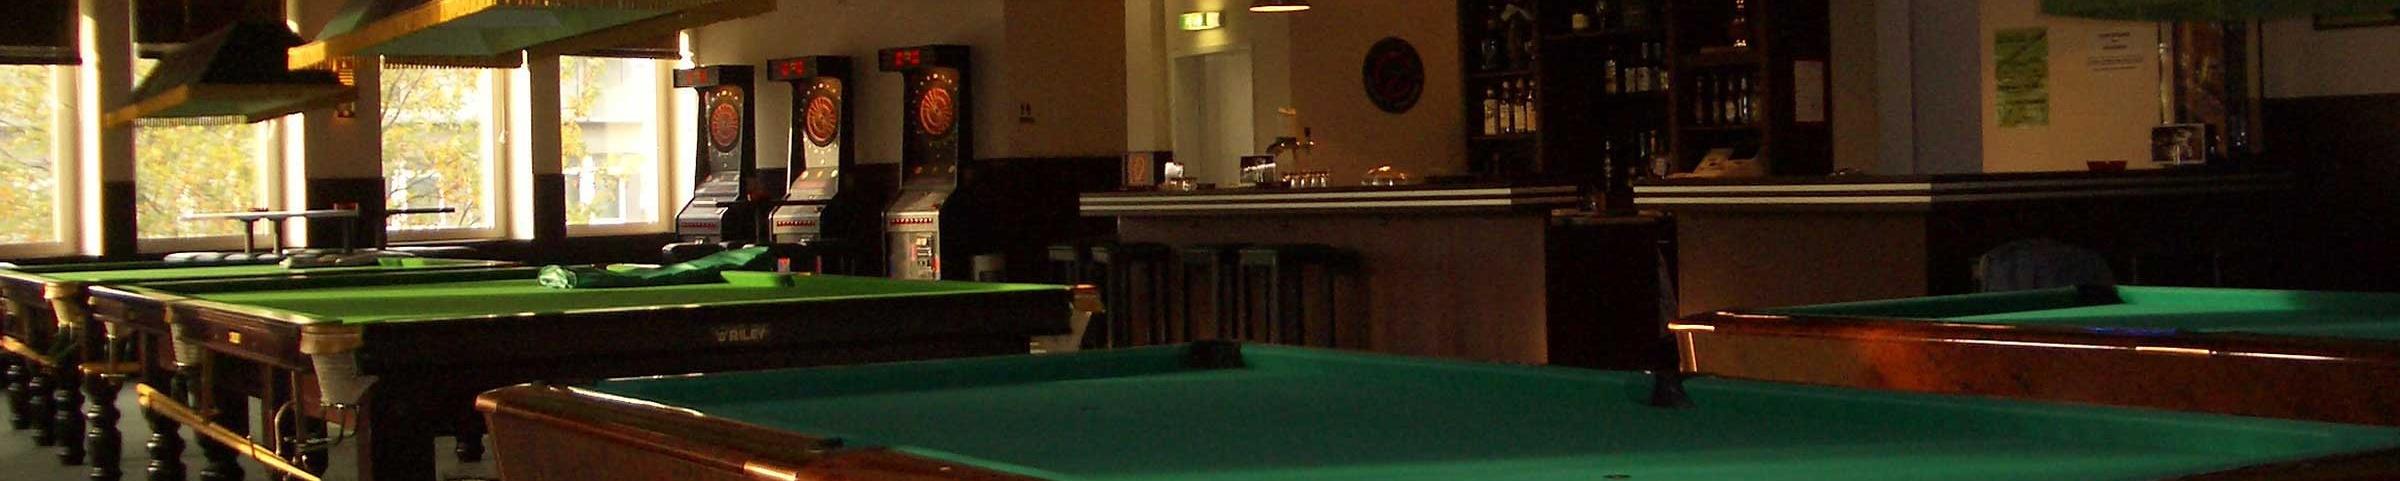 cottonclub snooker bar